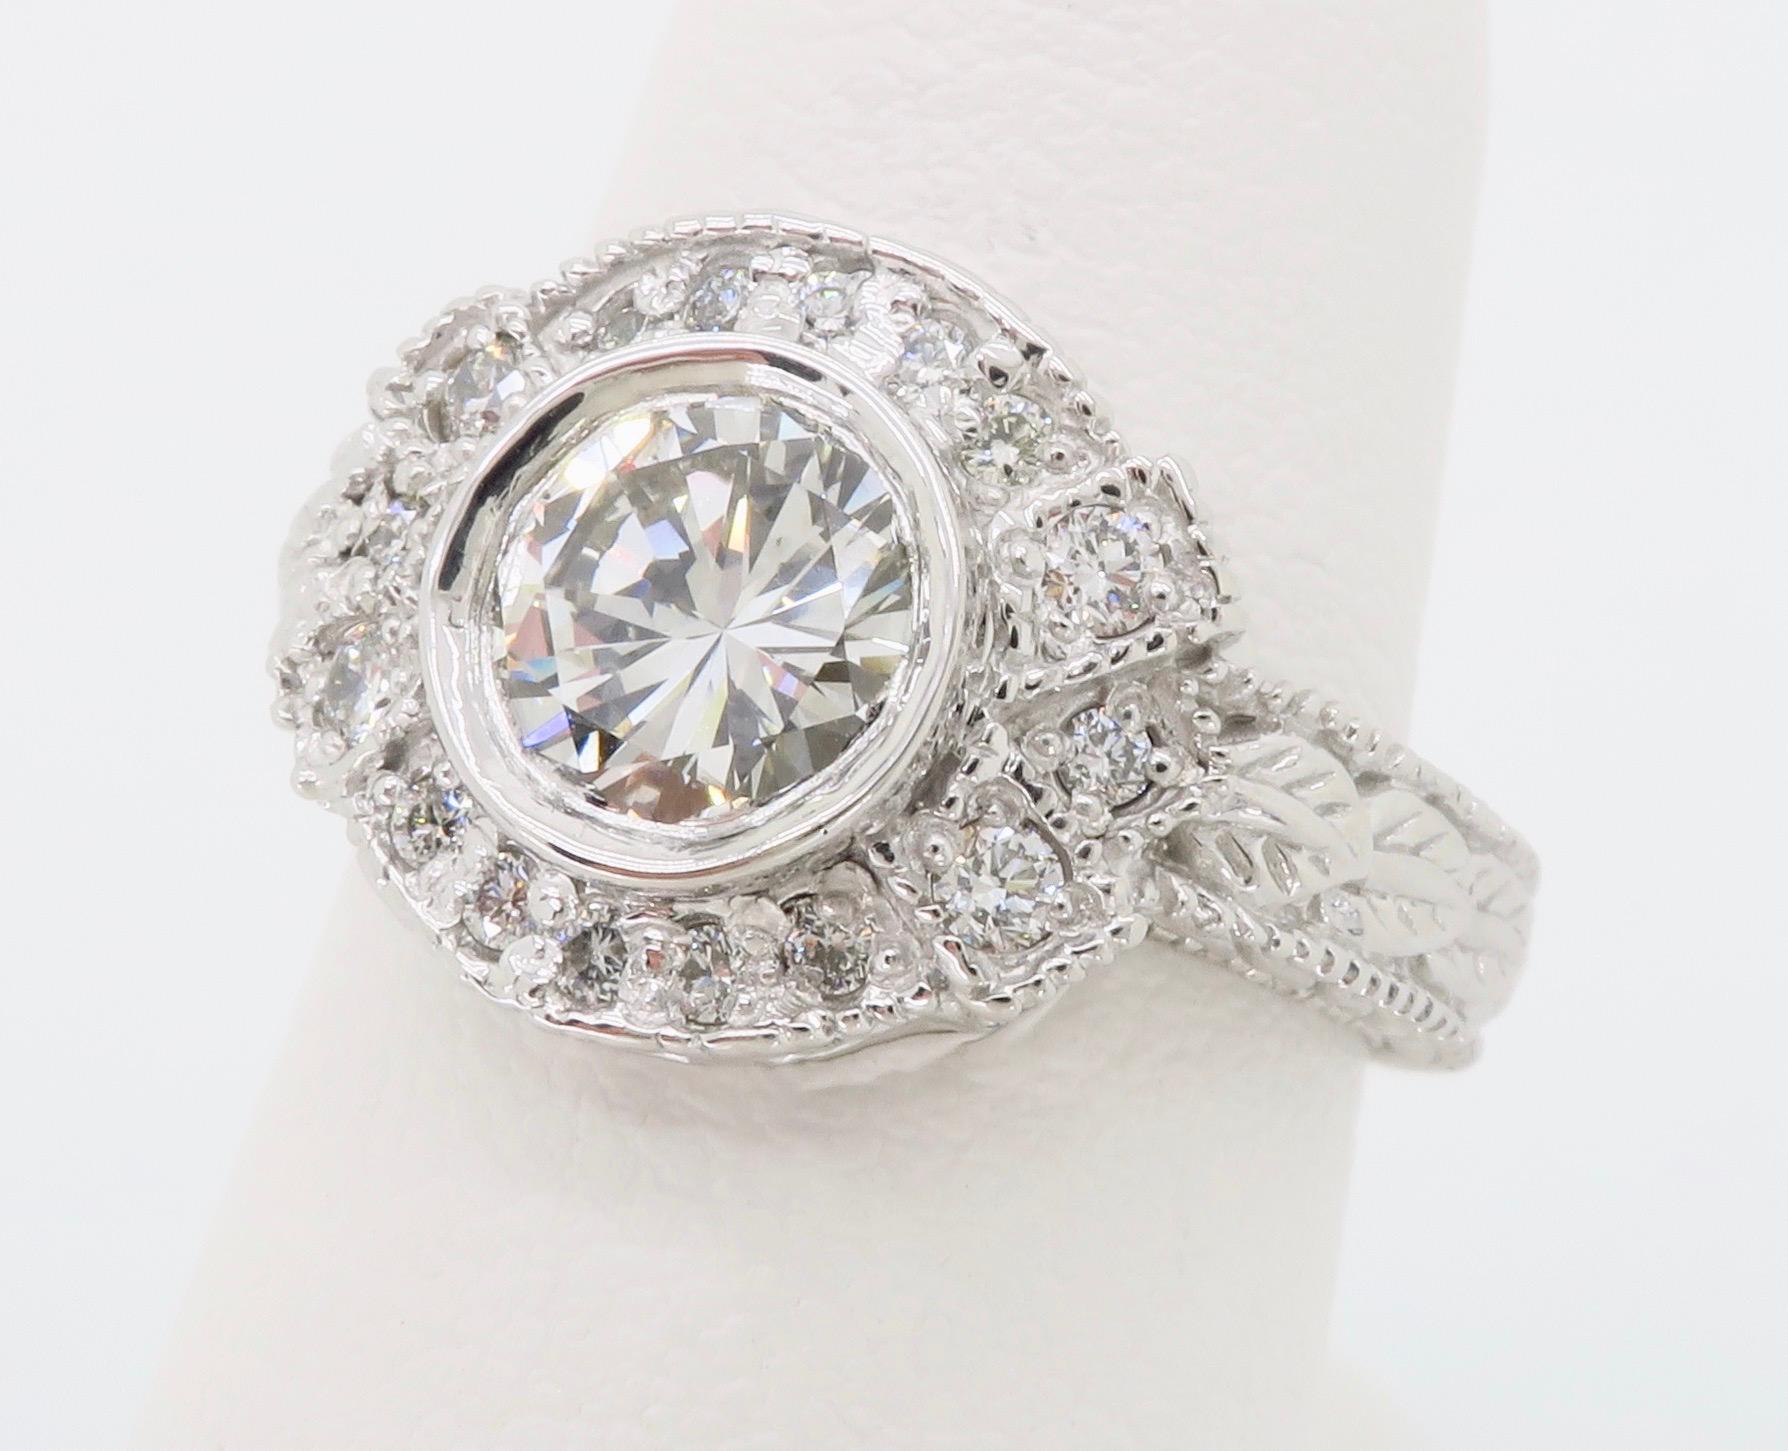 Vintage Inspired 1.27 Carat Diamond Ring Made in 14 Karat White Gold For Sale 8